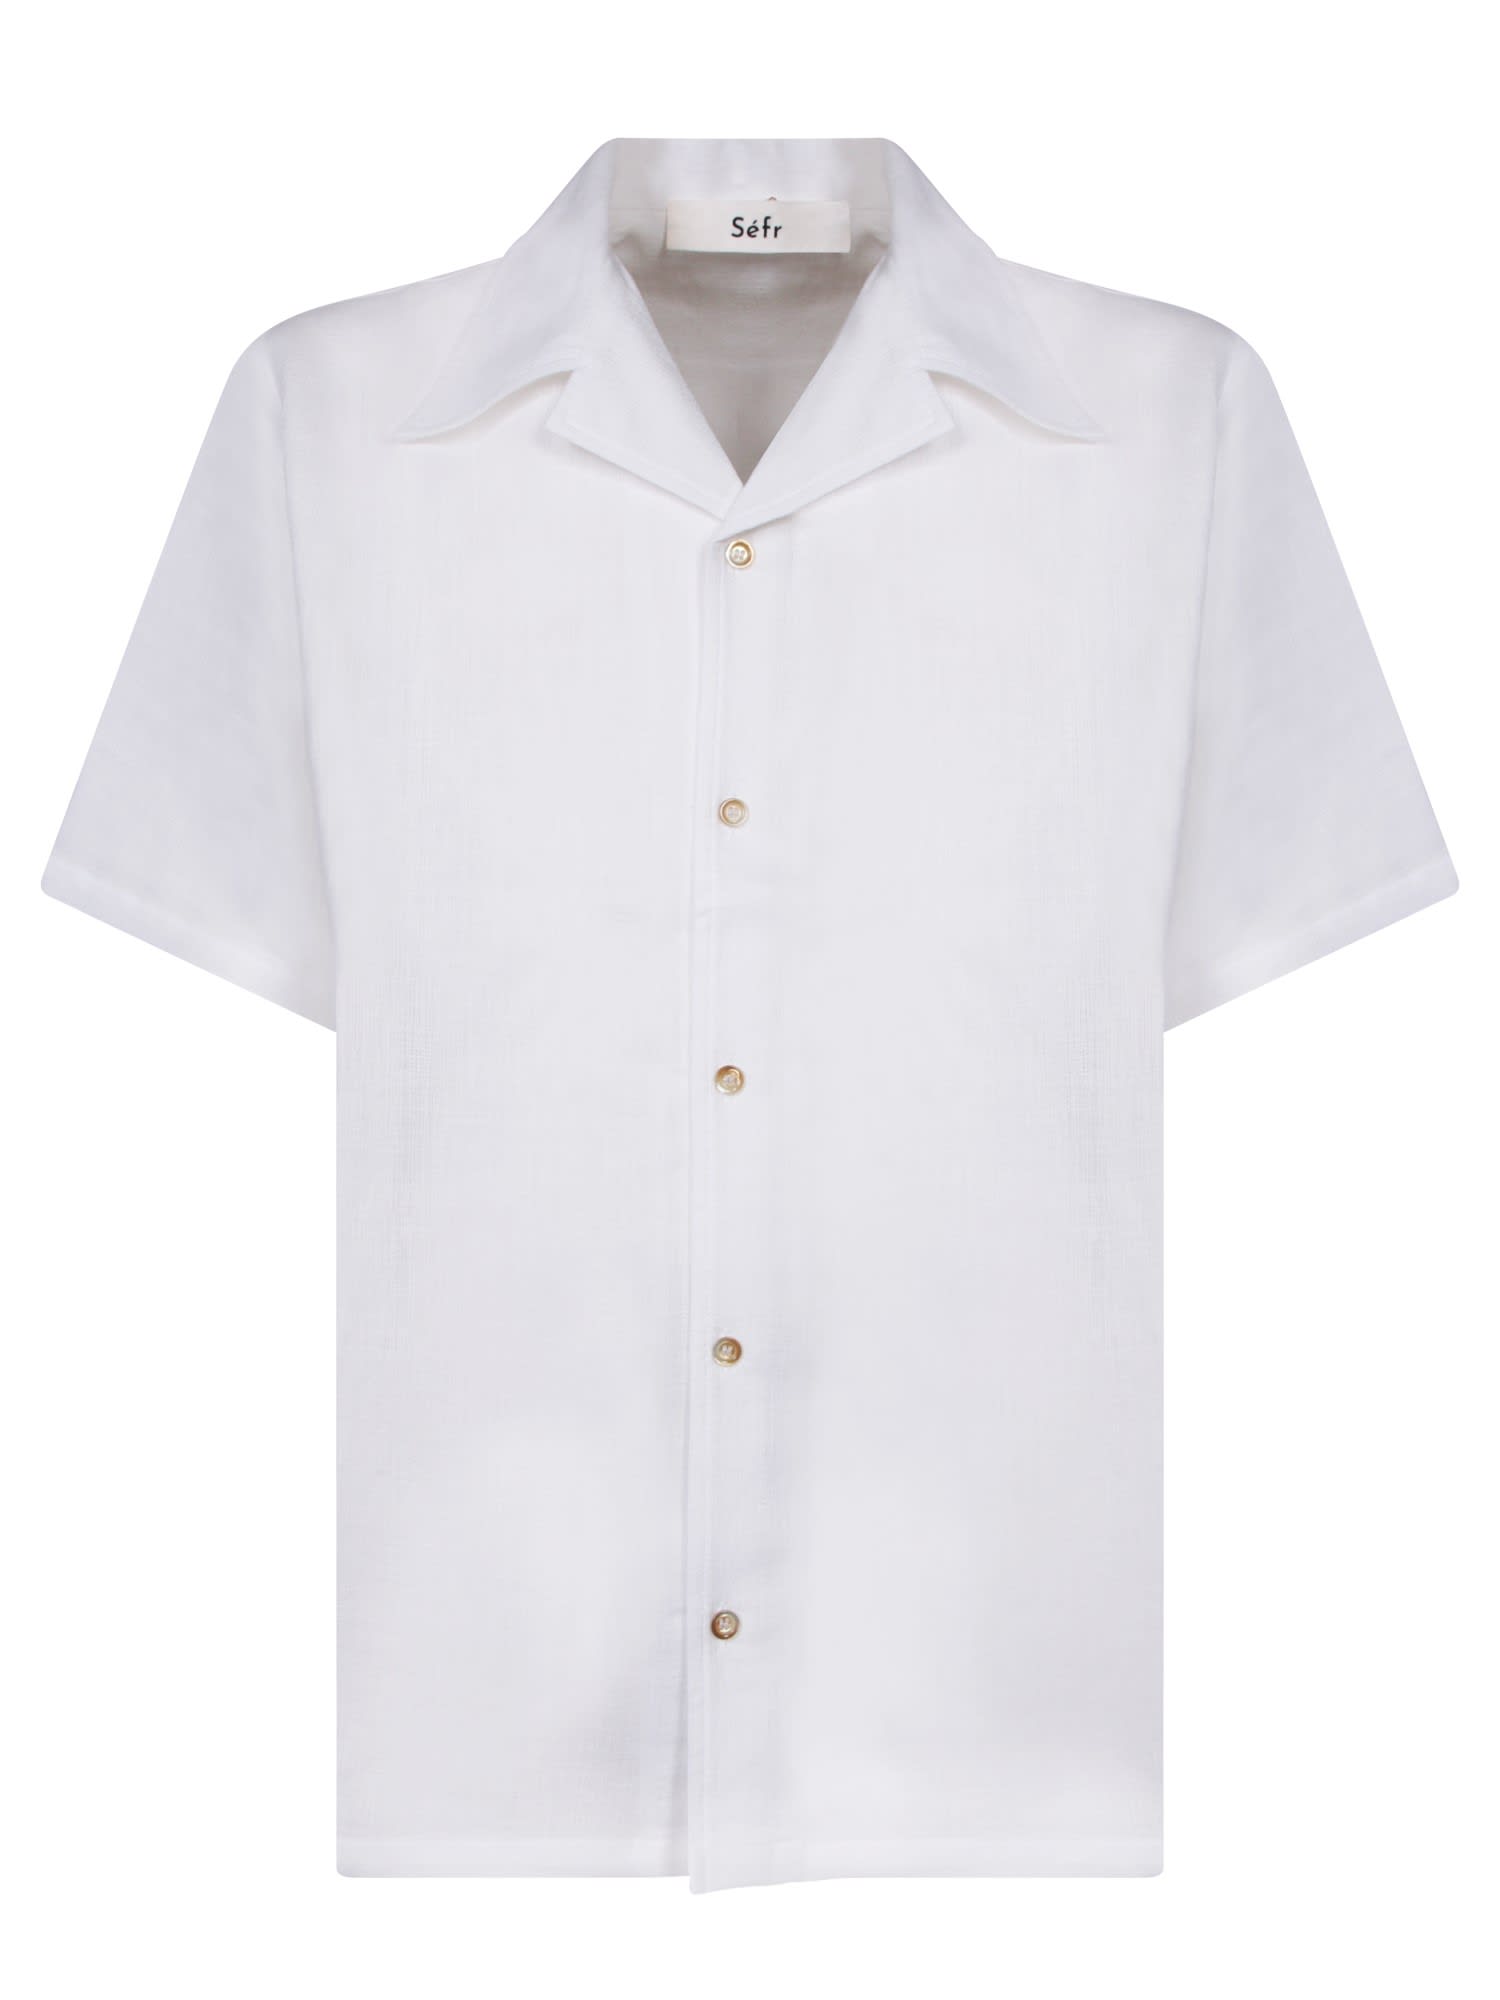 Shop Séfr Dalian White Shirt